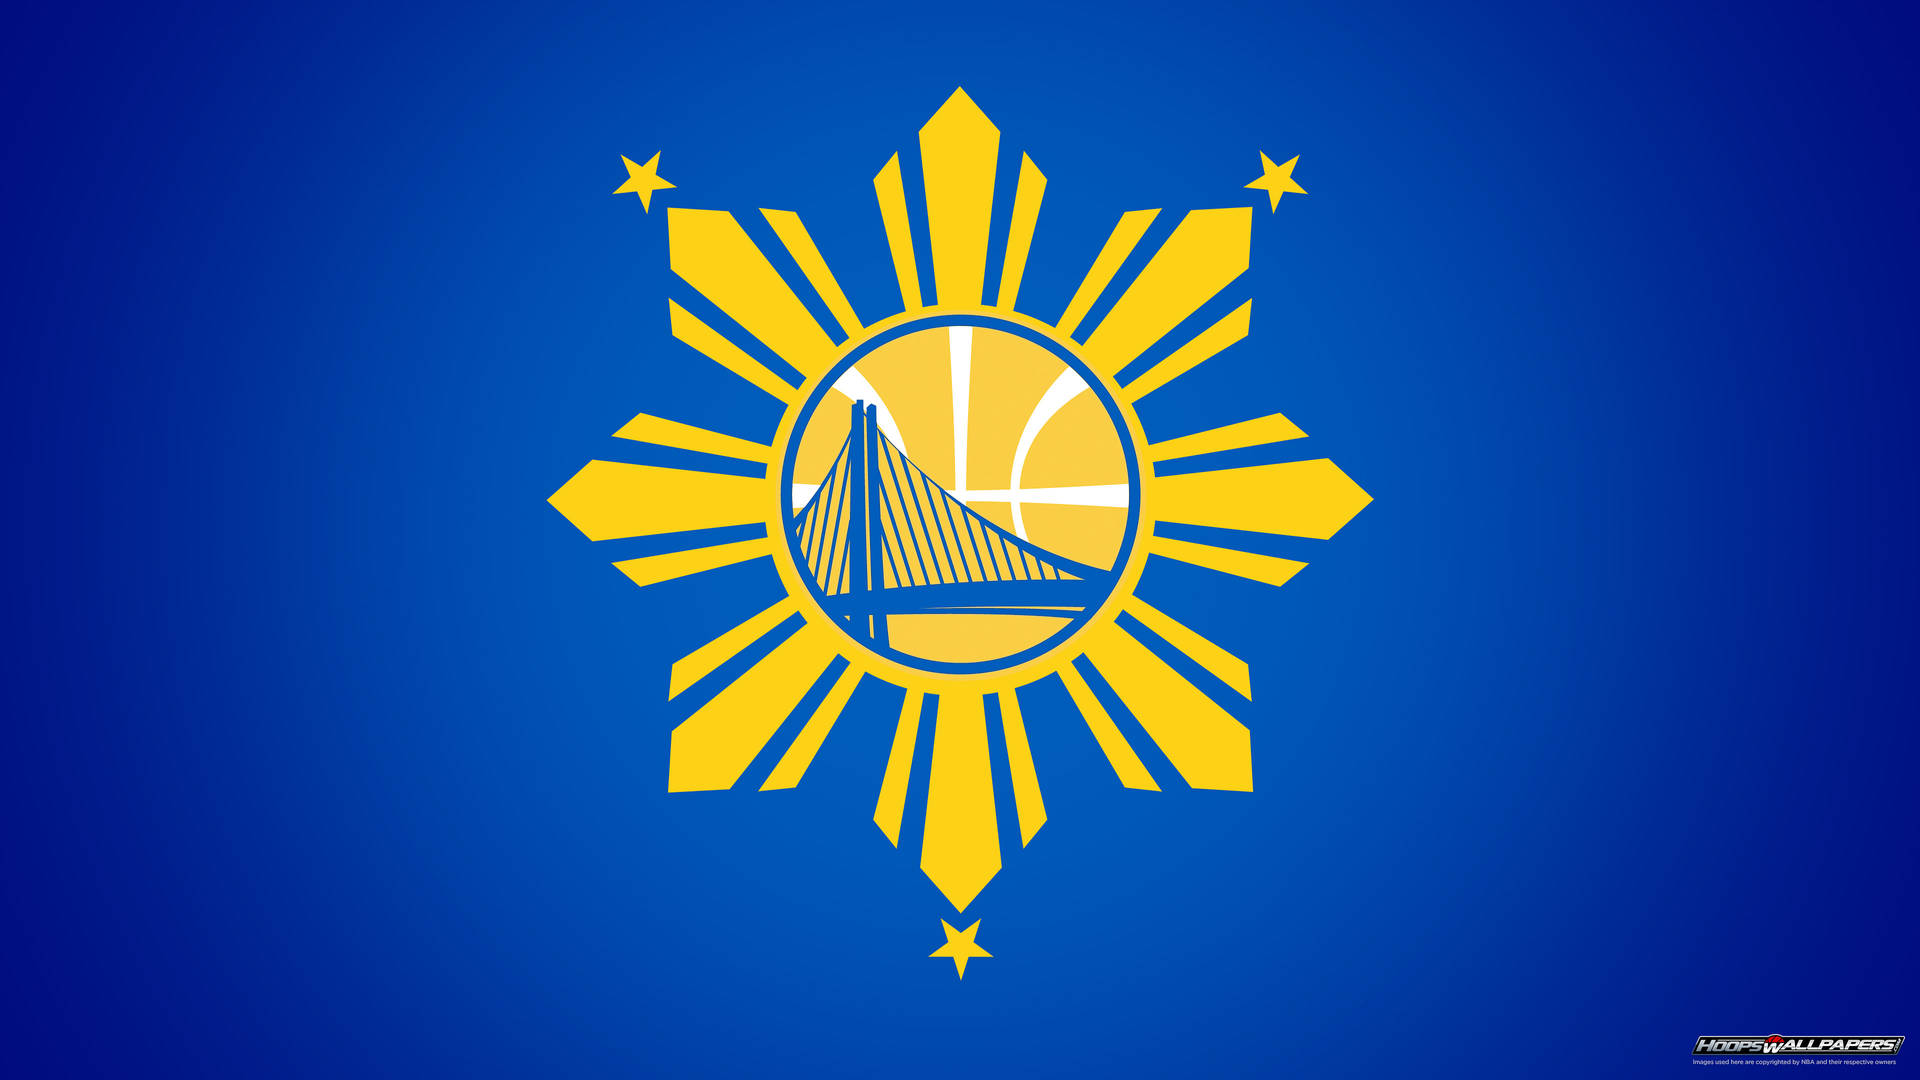 Golden State Warriors Philippine Themed Logo Wallpaper